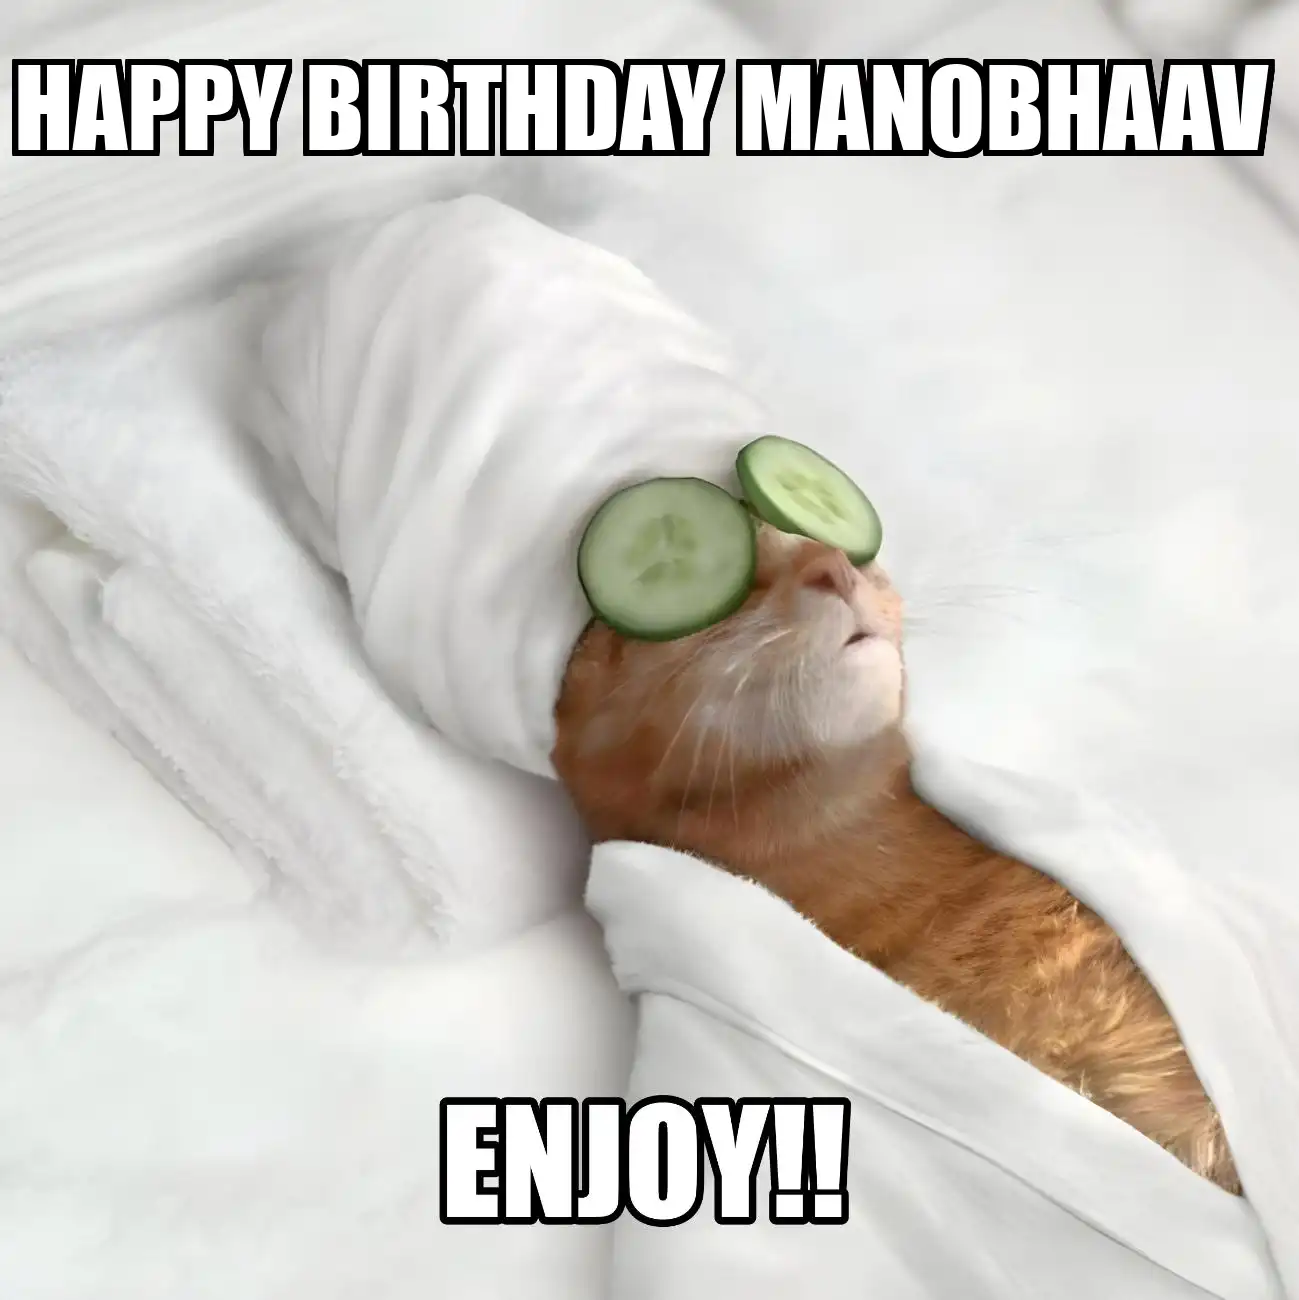 Happy Birthday Manobhaav Enjoy Cat Meme